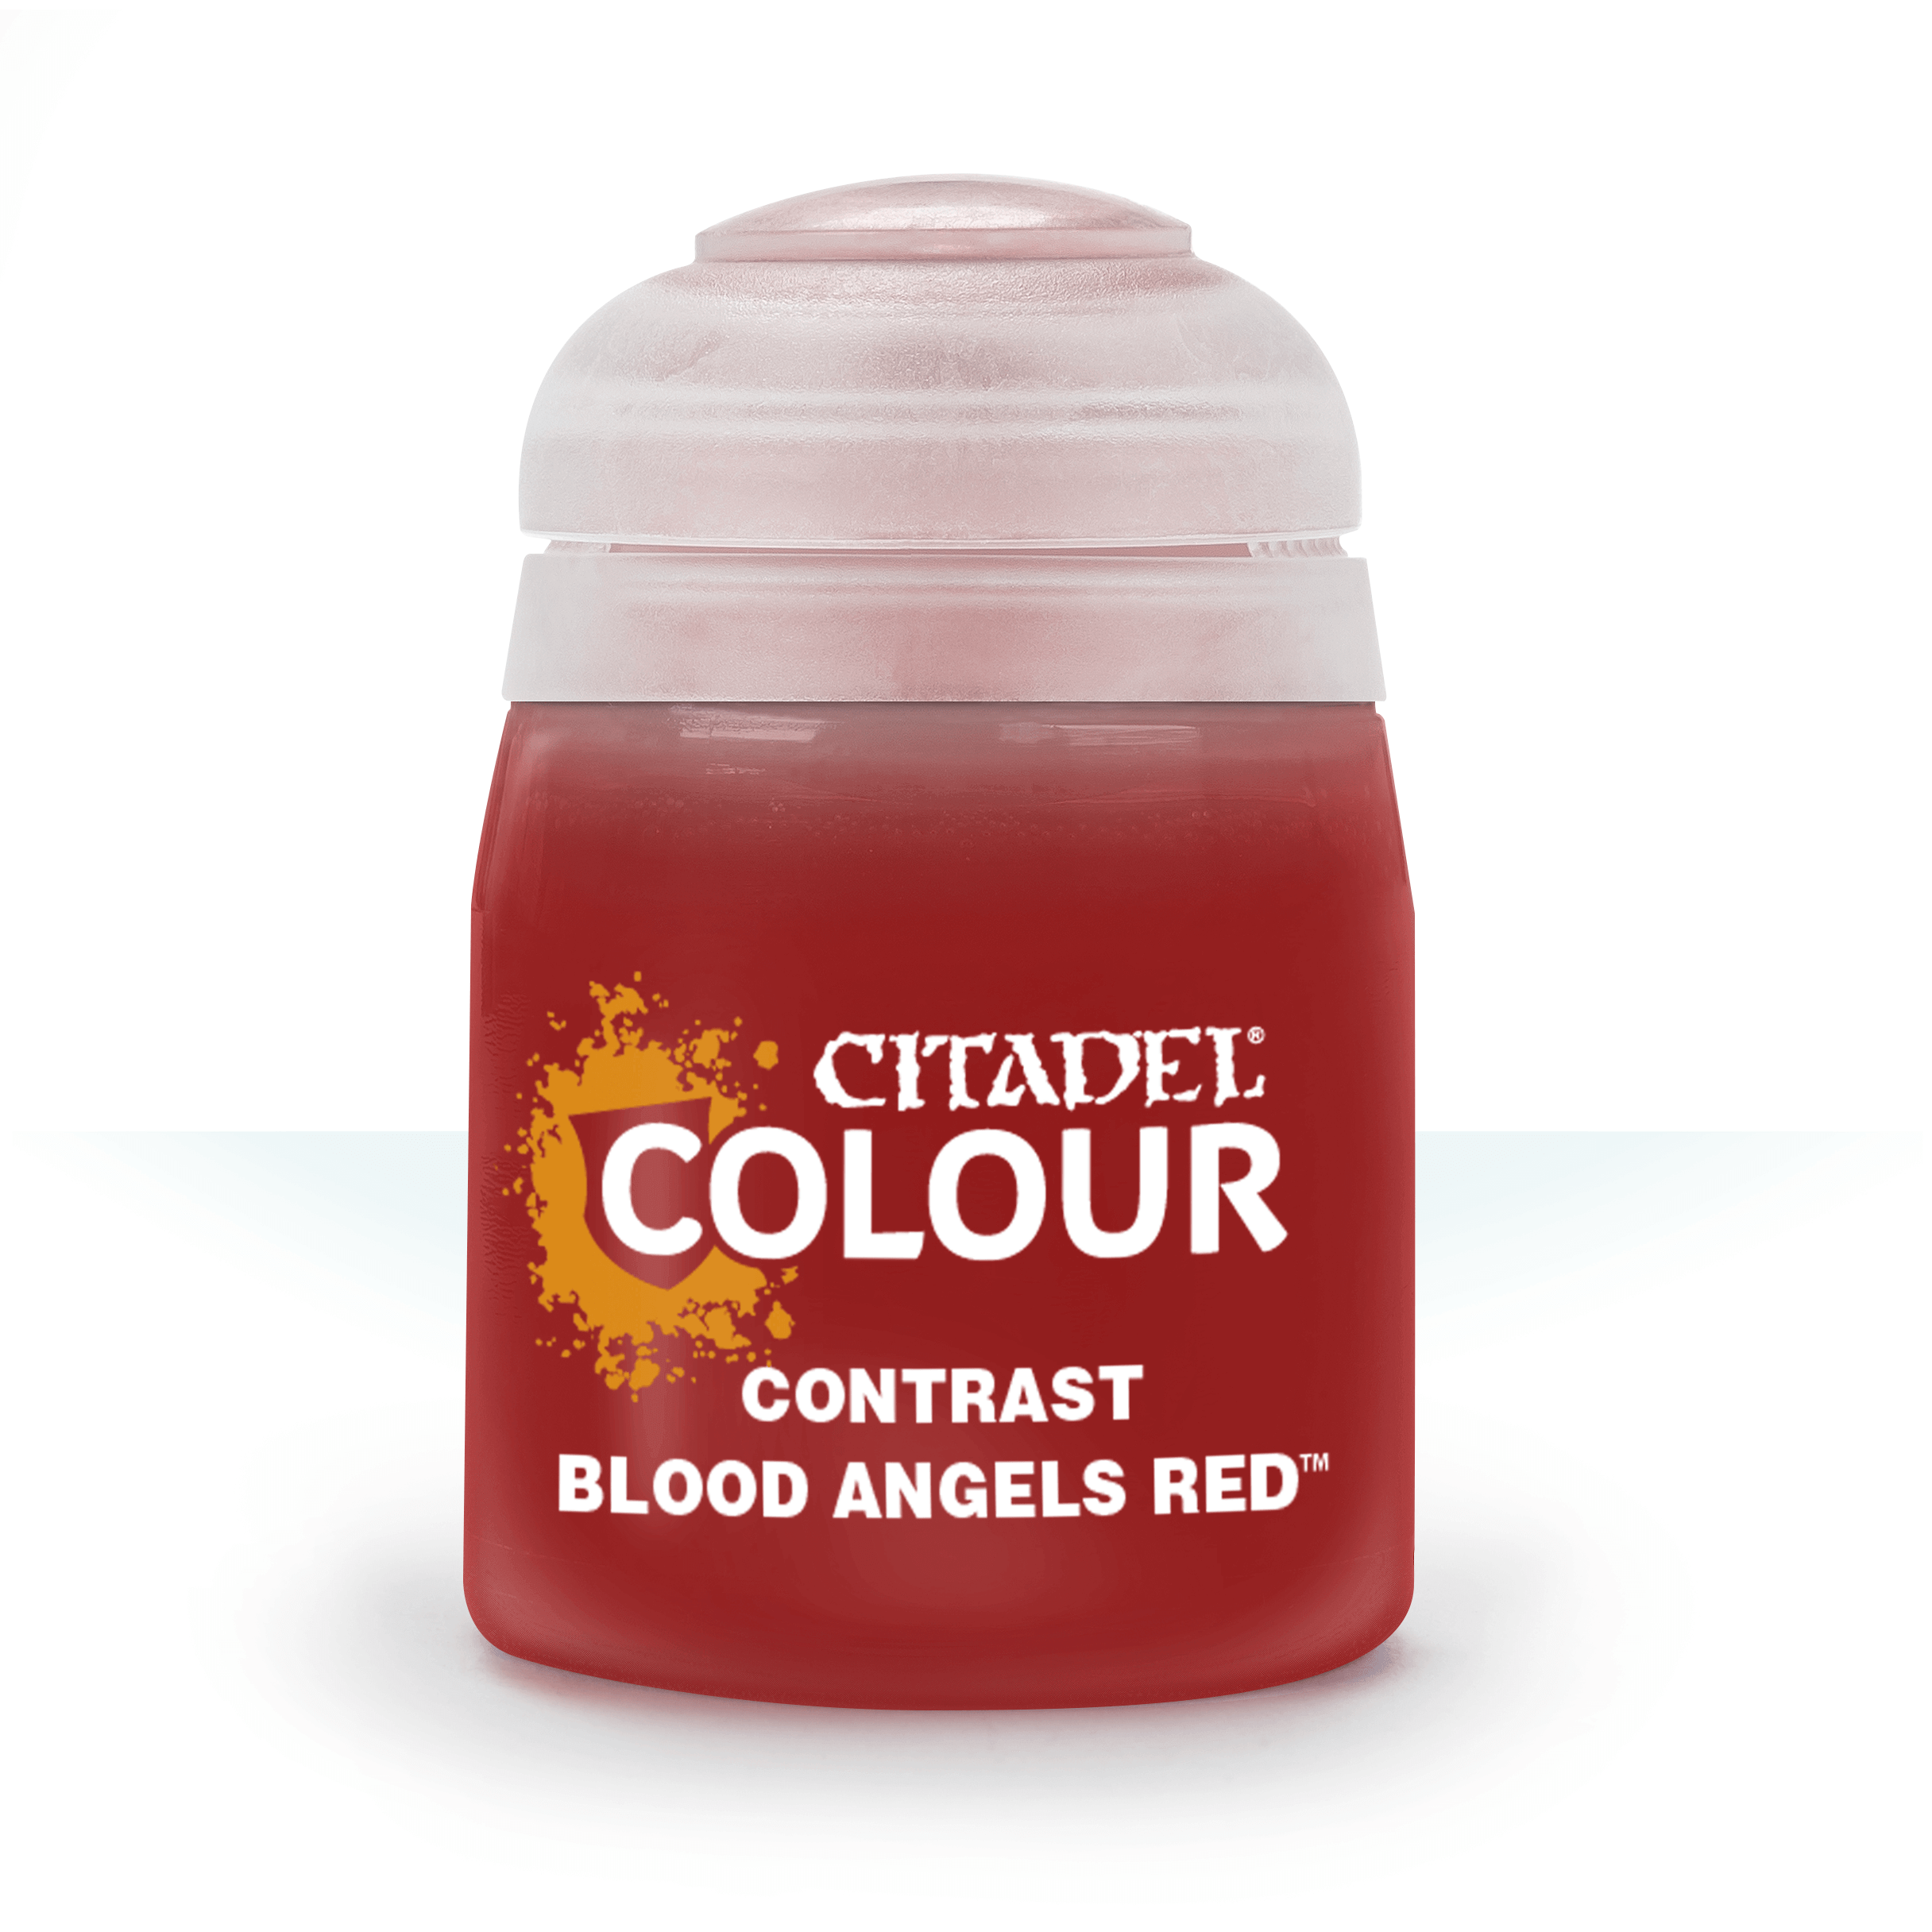 https://3trolle.pl/41419/citadel-contrast-blood-angels-red-18-ml.jpg